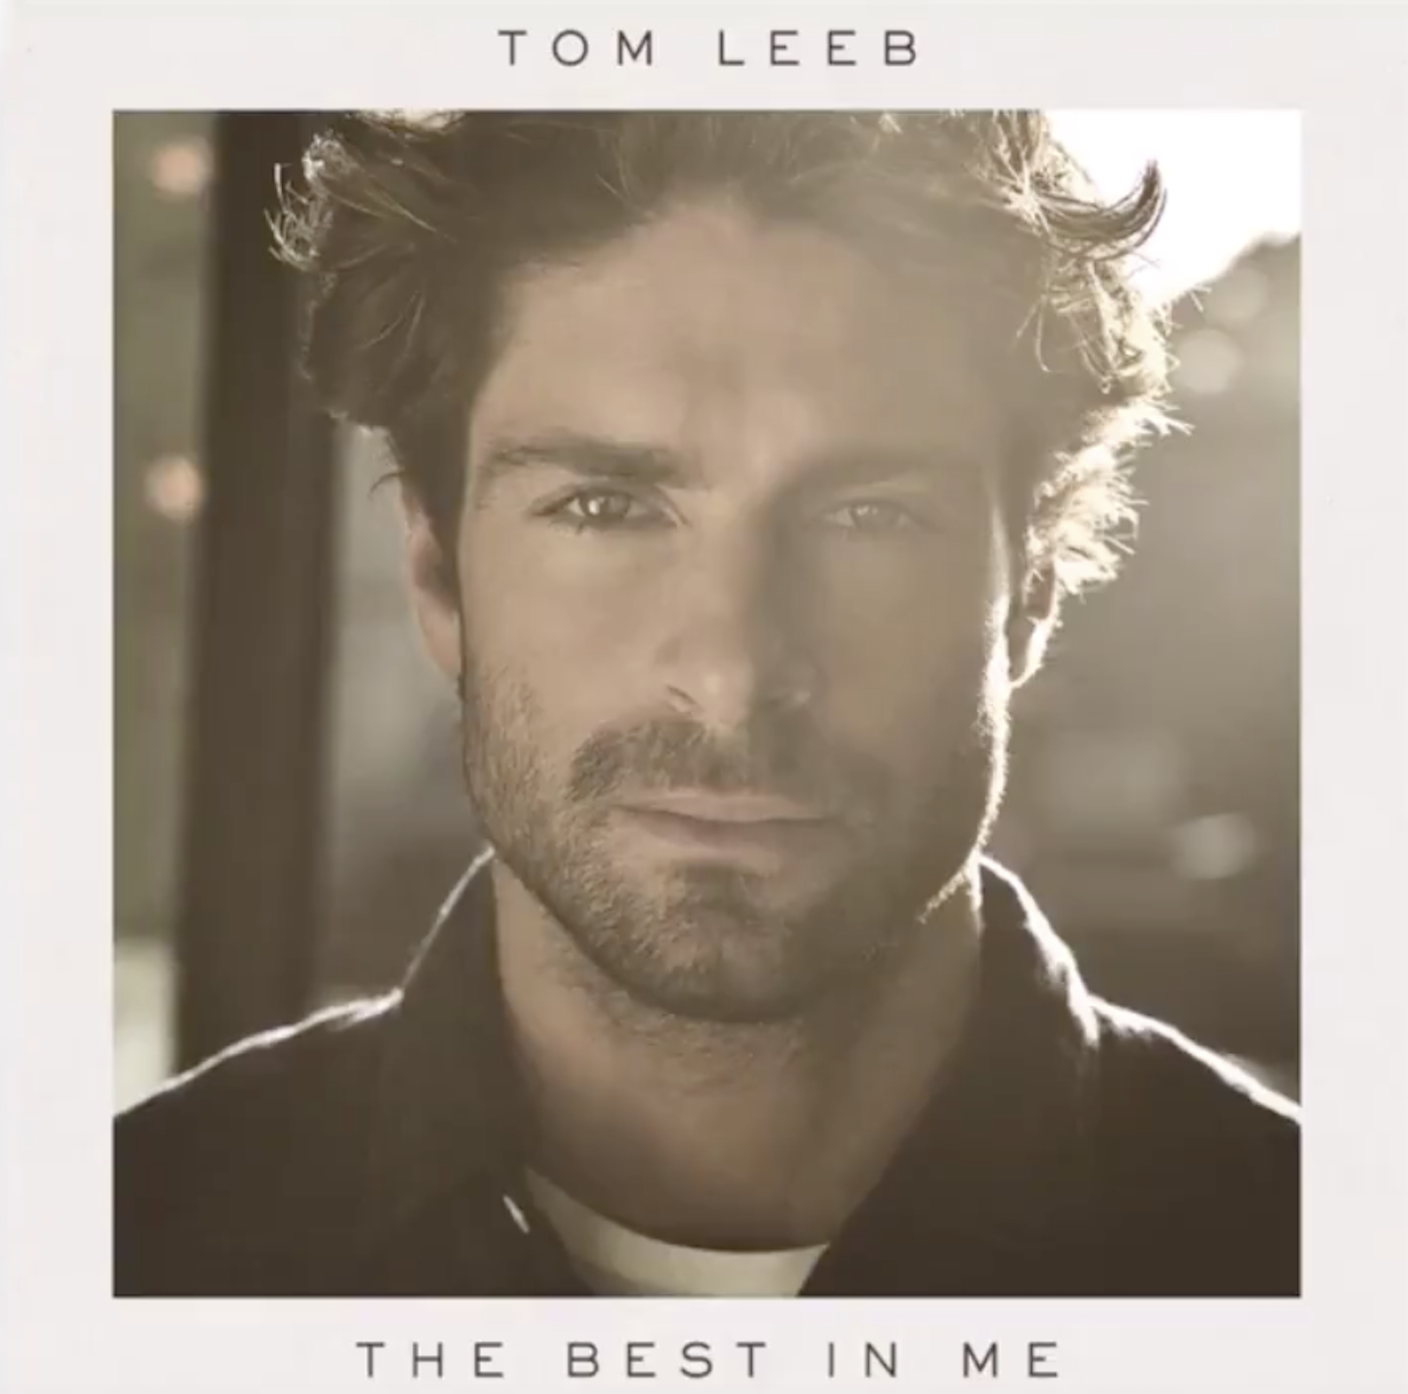 Tom Leeb - Eurovision - Eurovision 2020 - The Best in Me - pochette - single